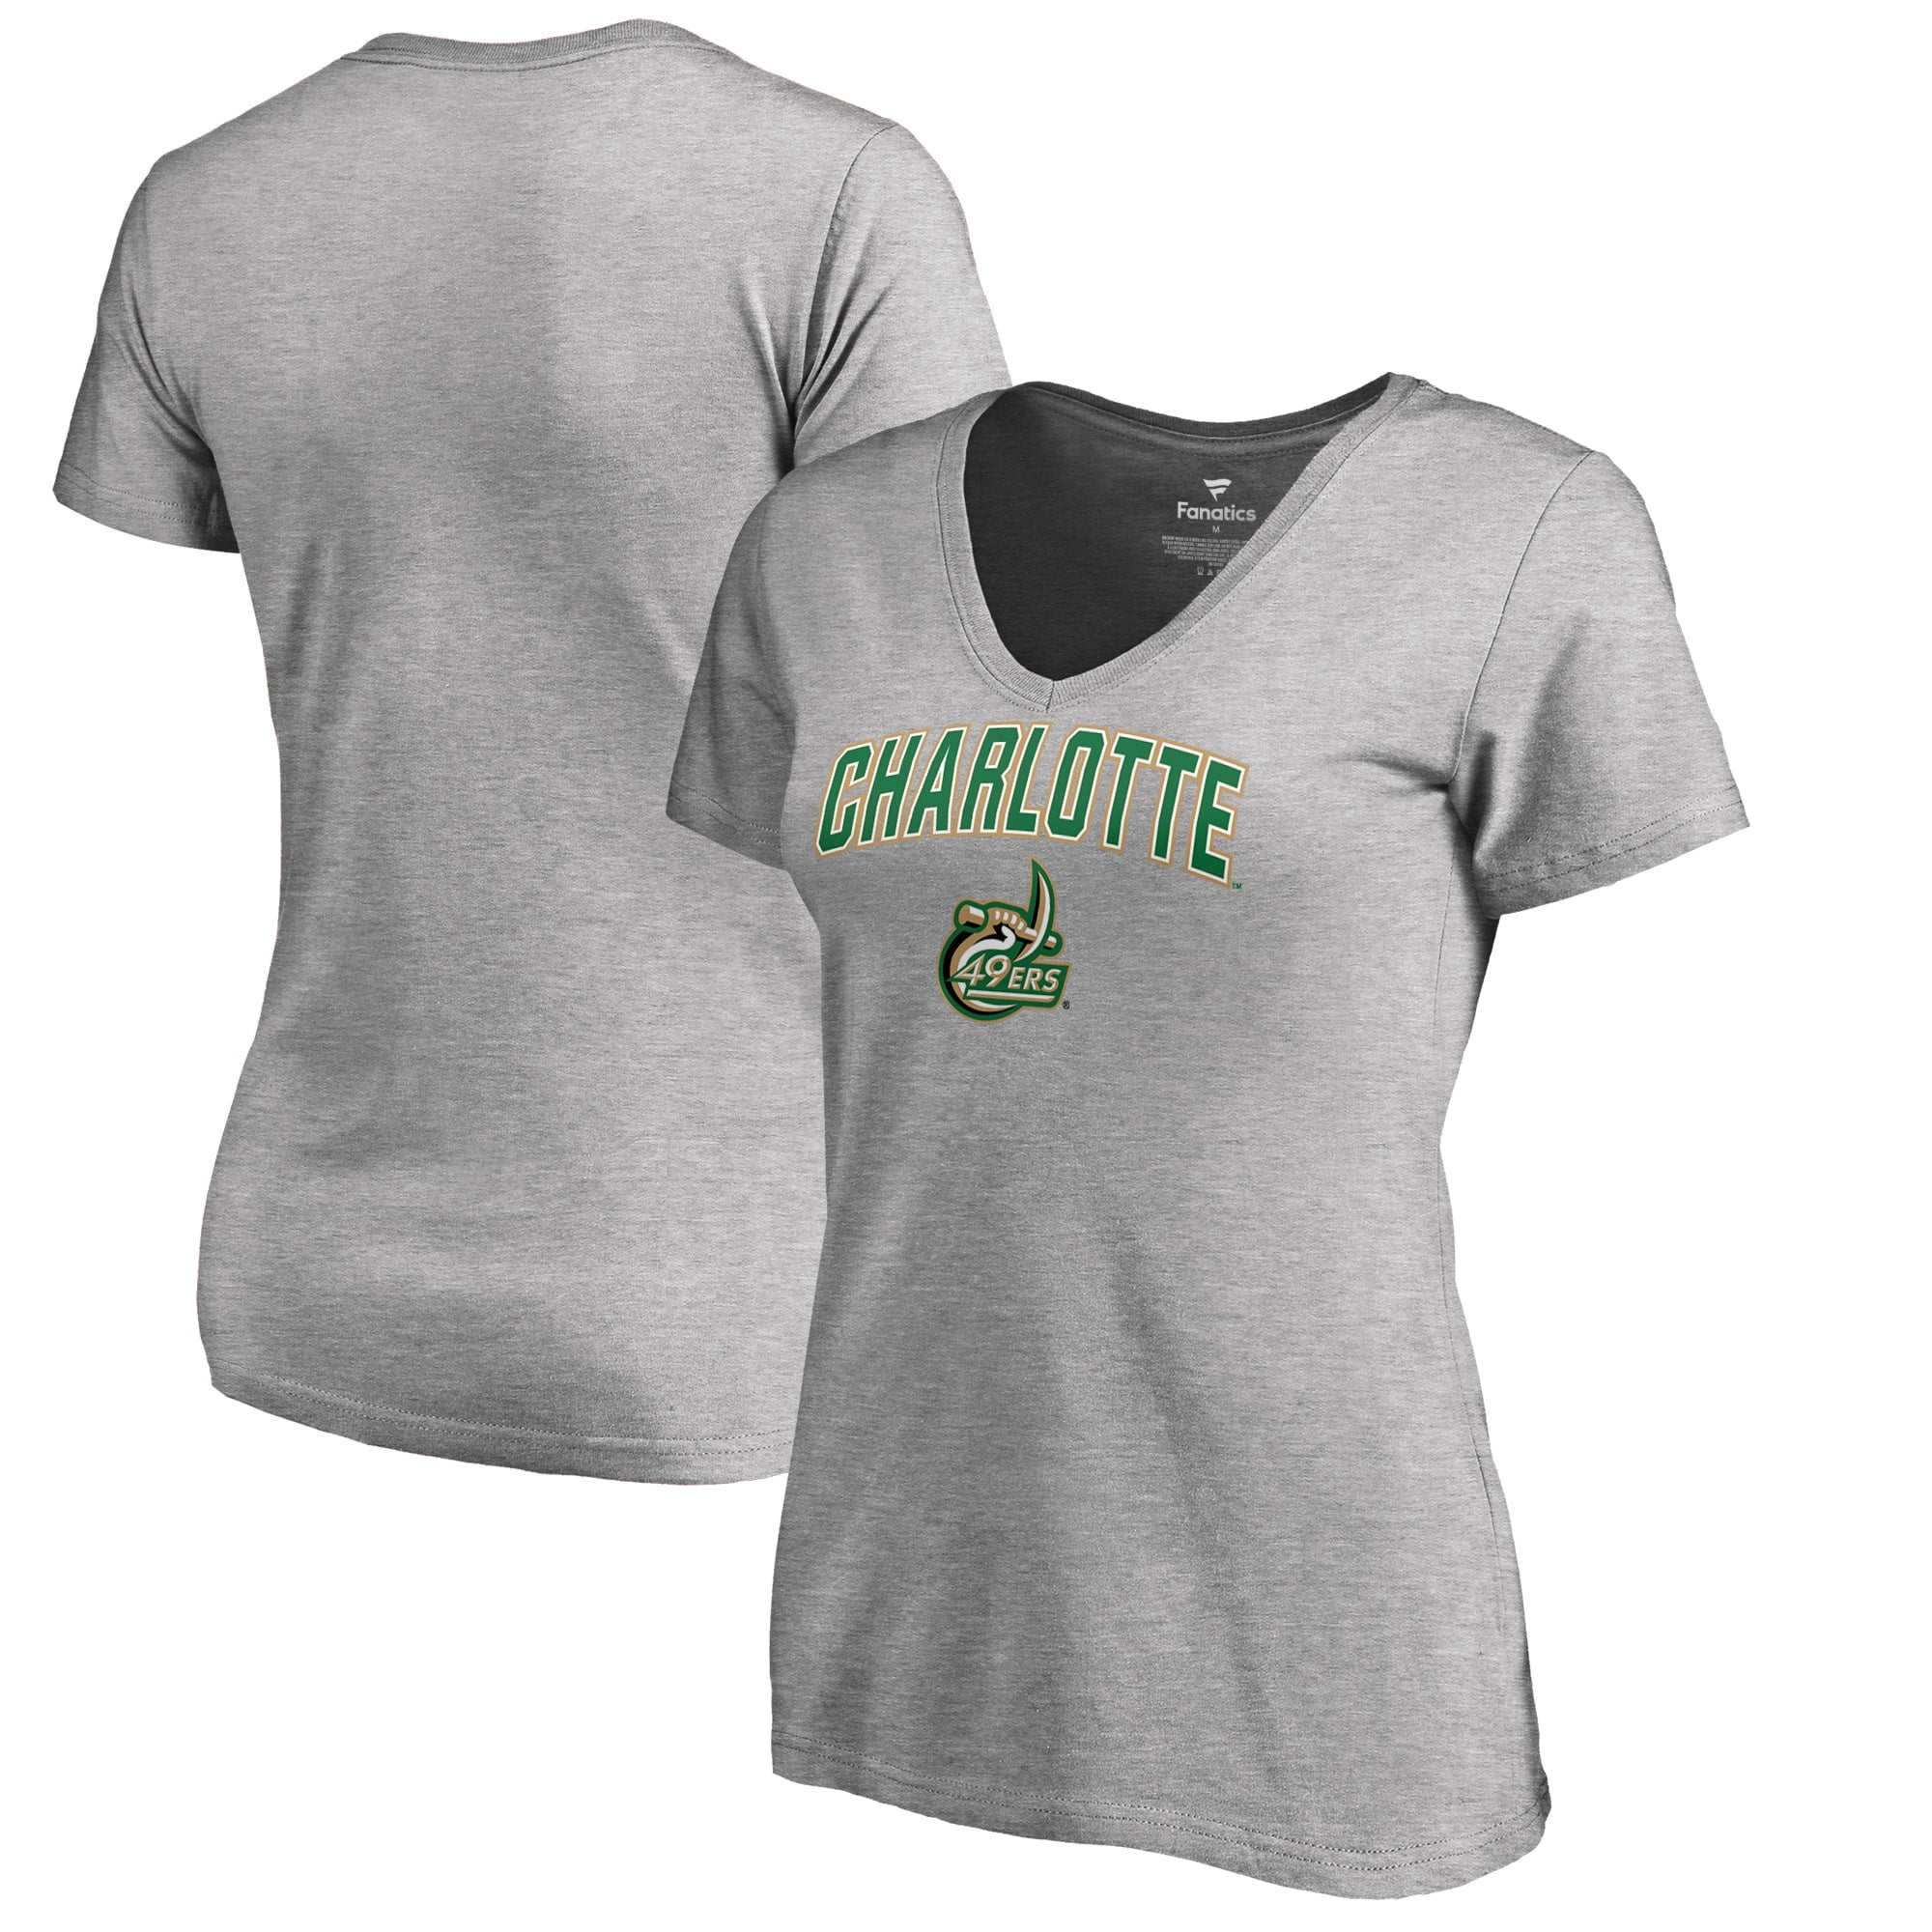 charlotte 49ers merchandise